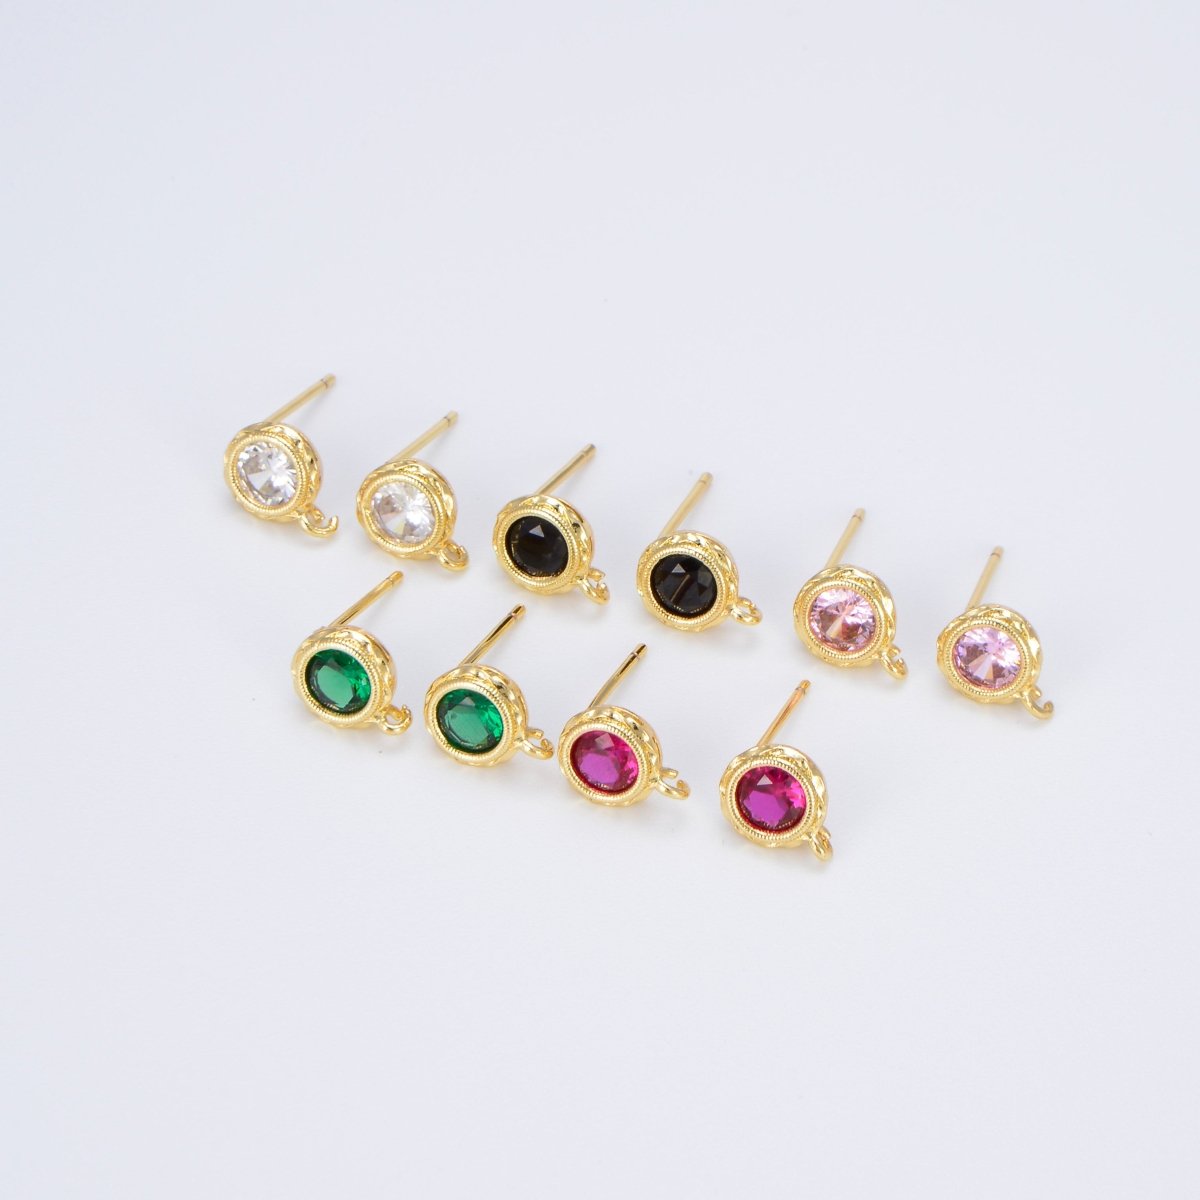 Tiny Cz Cubic Earring Post w/ open link, Nickel free, 15x7.6mm, 14K gold plated brass, CZ, Earring making post 1 pair L-268~L-274 L-323 - DLUXCA